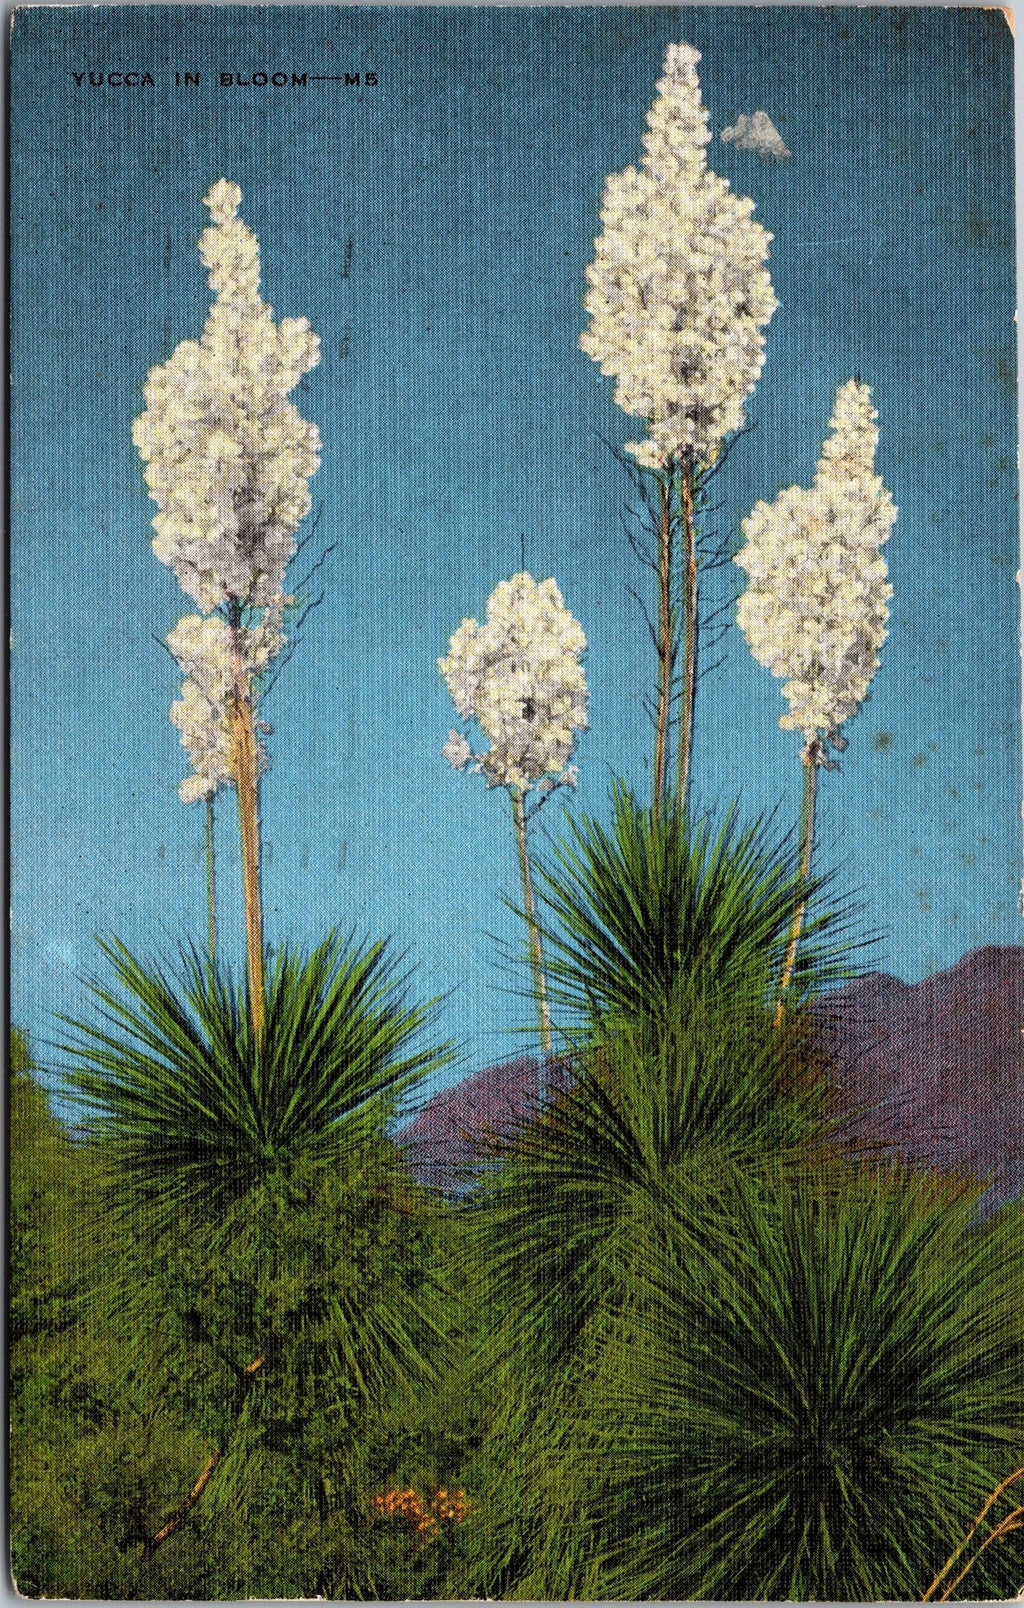 Beautiful Yuccas In Bloom, Vintage Post Card